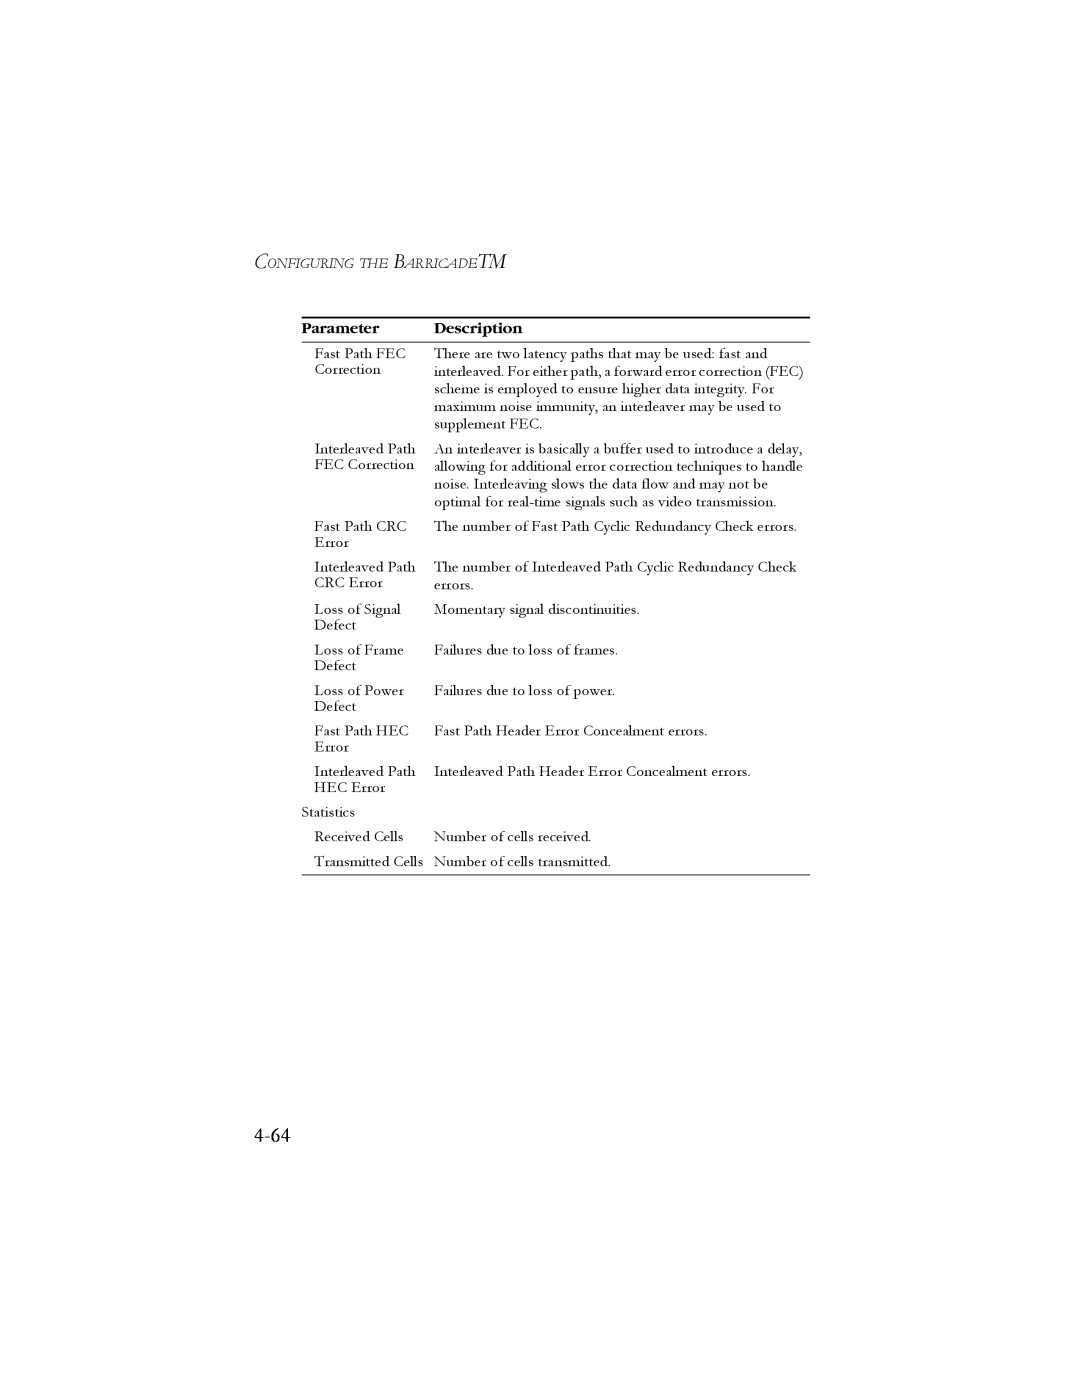 SMC Networks SMC7904BRB2 manual 4-64, Parameter Description, Interleaved Path FEC Correction 